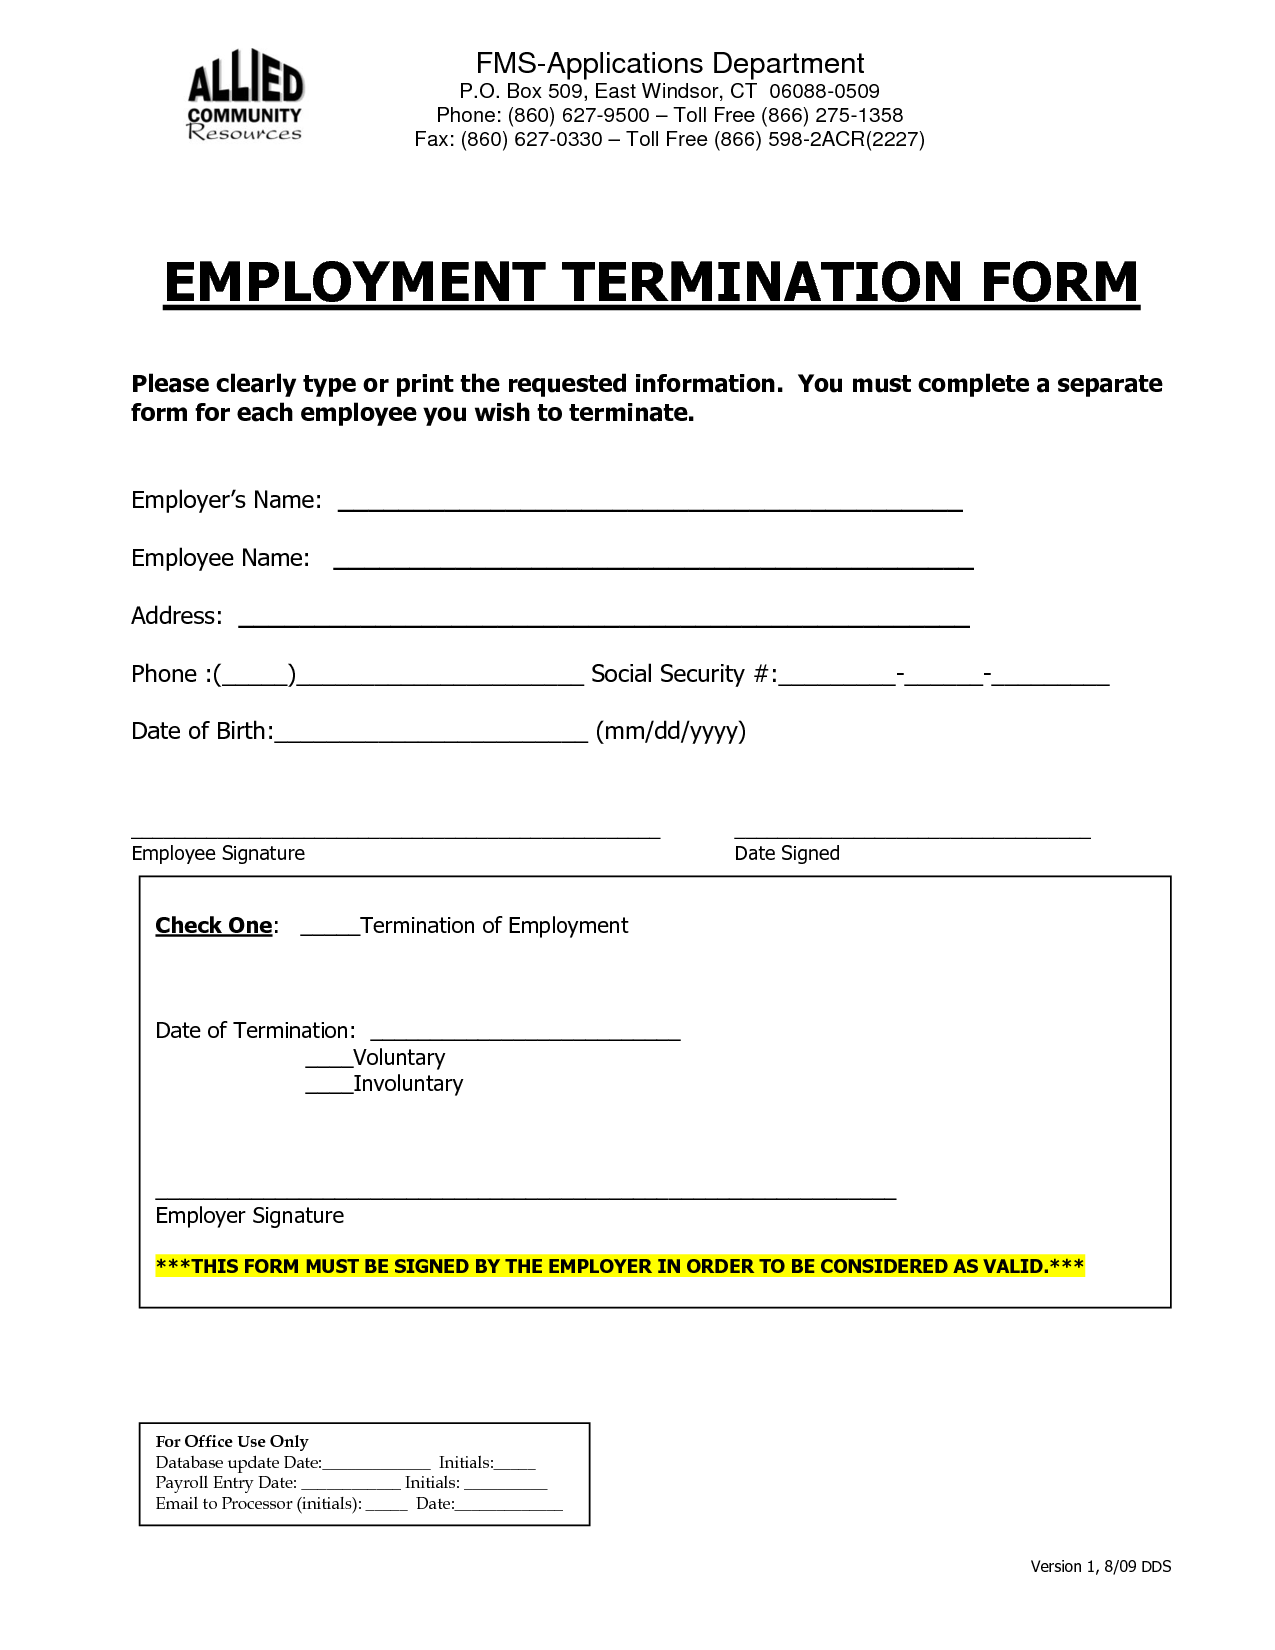 EMPLOYMENT TERMINATION FORM | Employee Forms | Pinterest | Human 